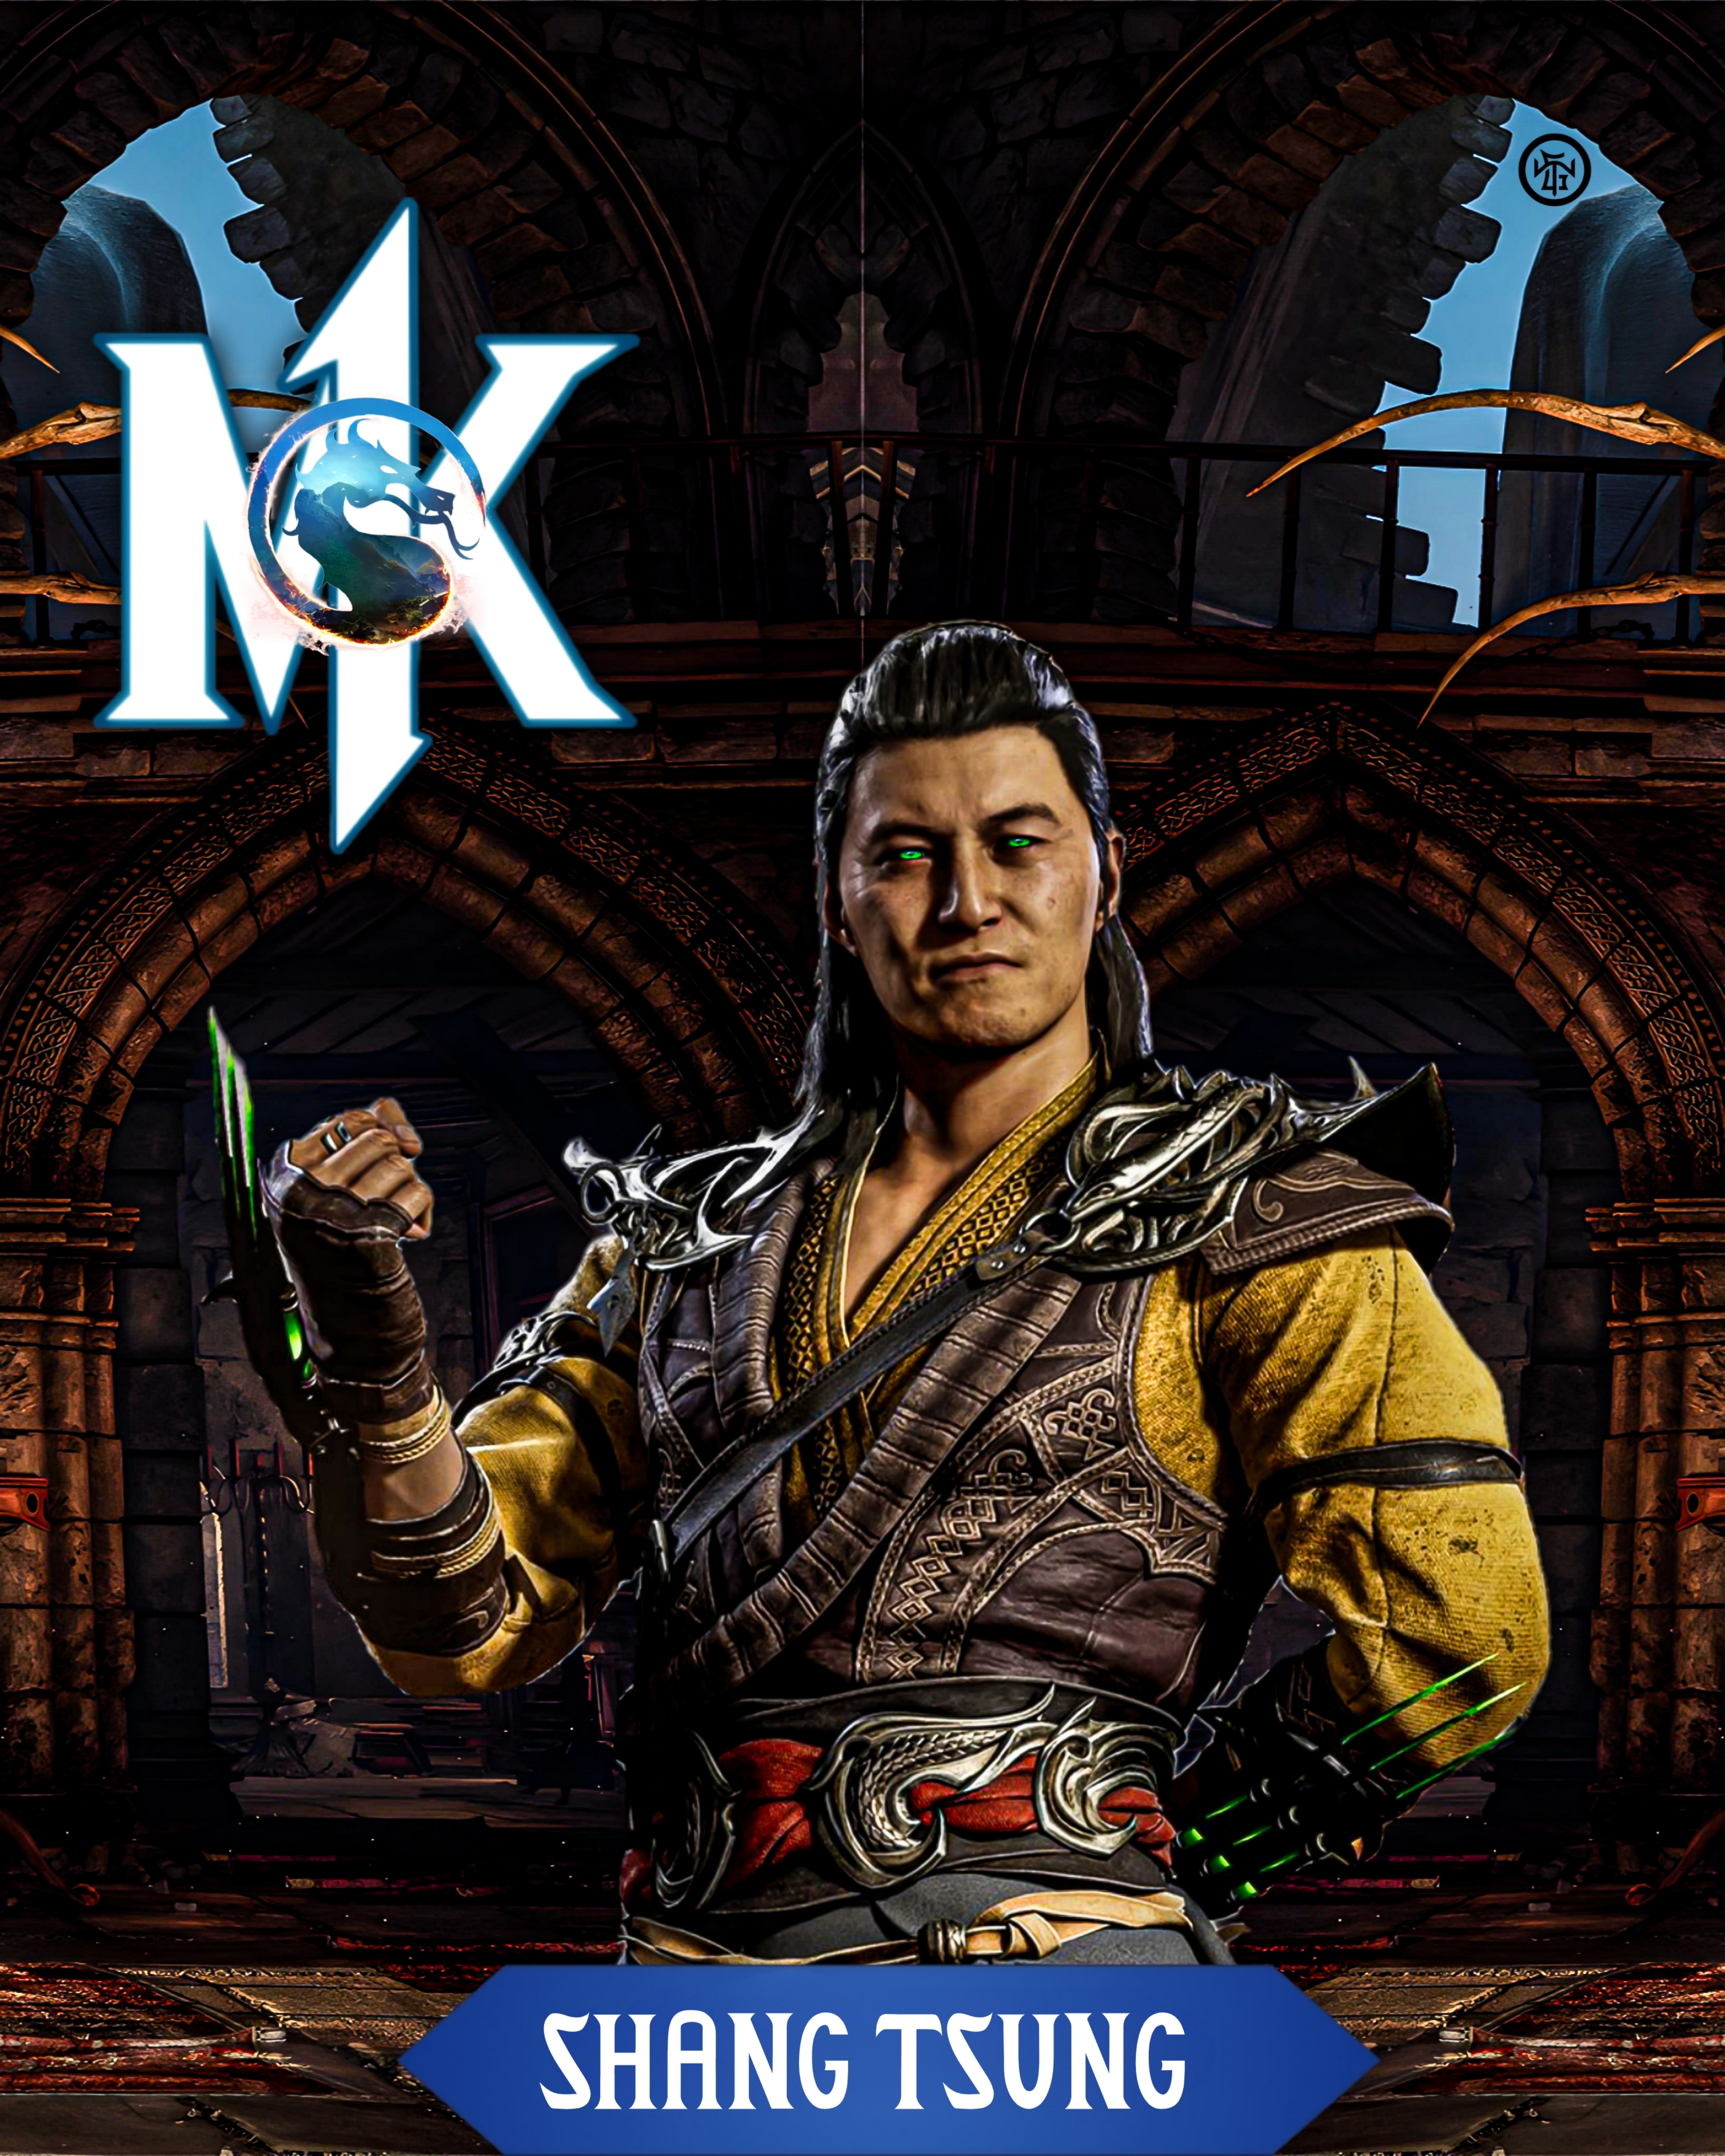 Mortal Kombat 11 Aftermath: Lord Shang Tsung by Fatal-Terry on DeviantArt